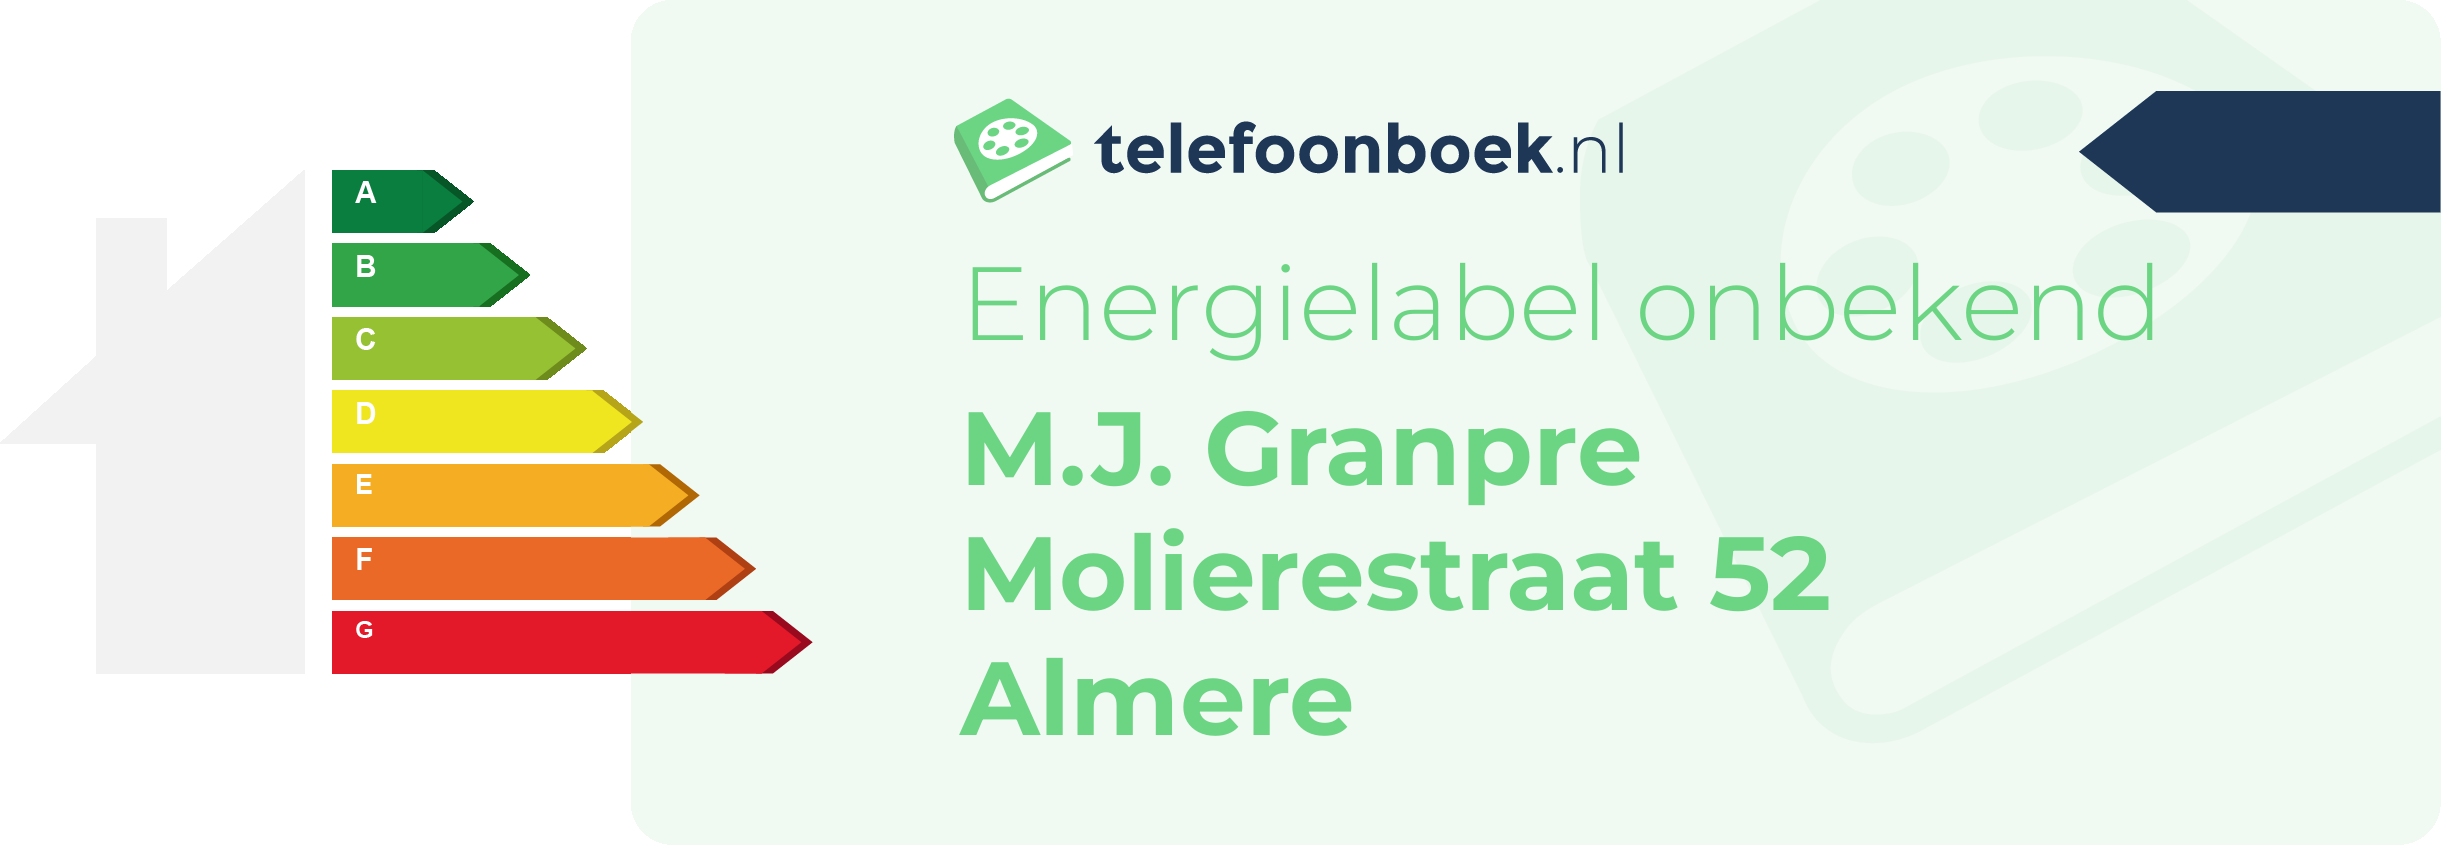 Energielabel M.J. Granpre Molierestraat 52 Almere